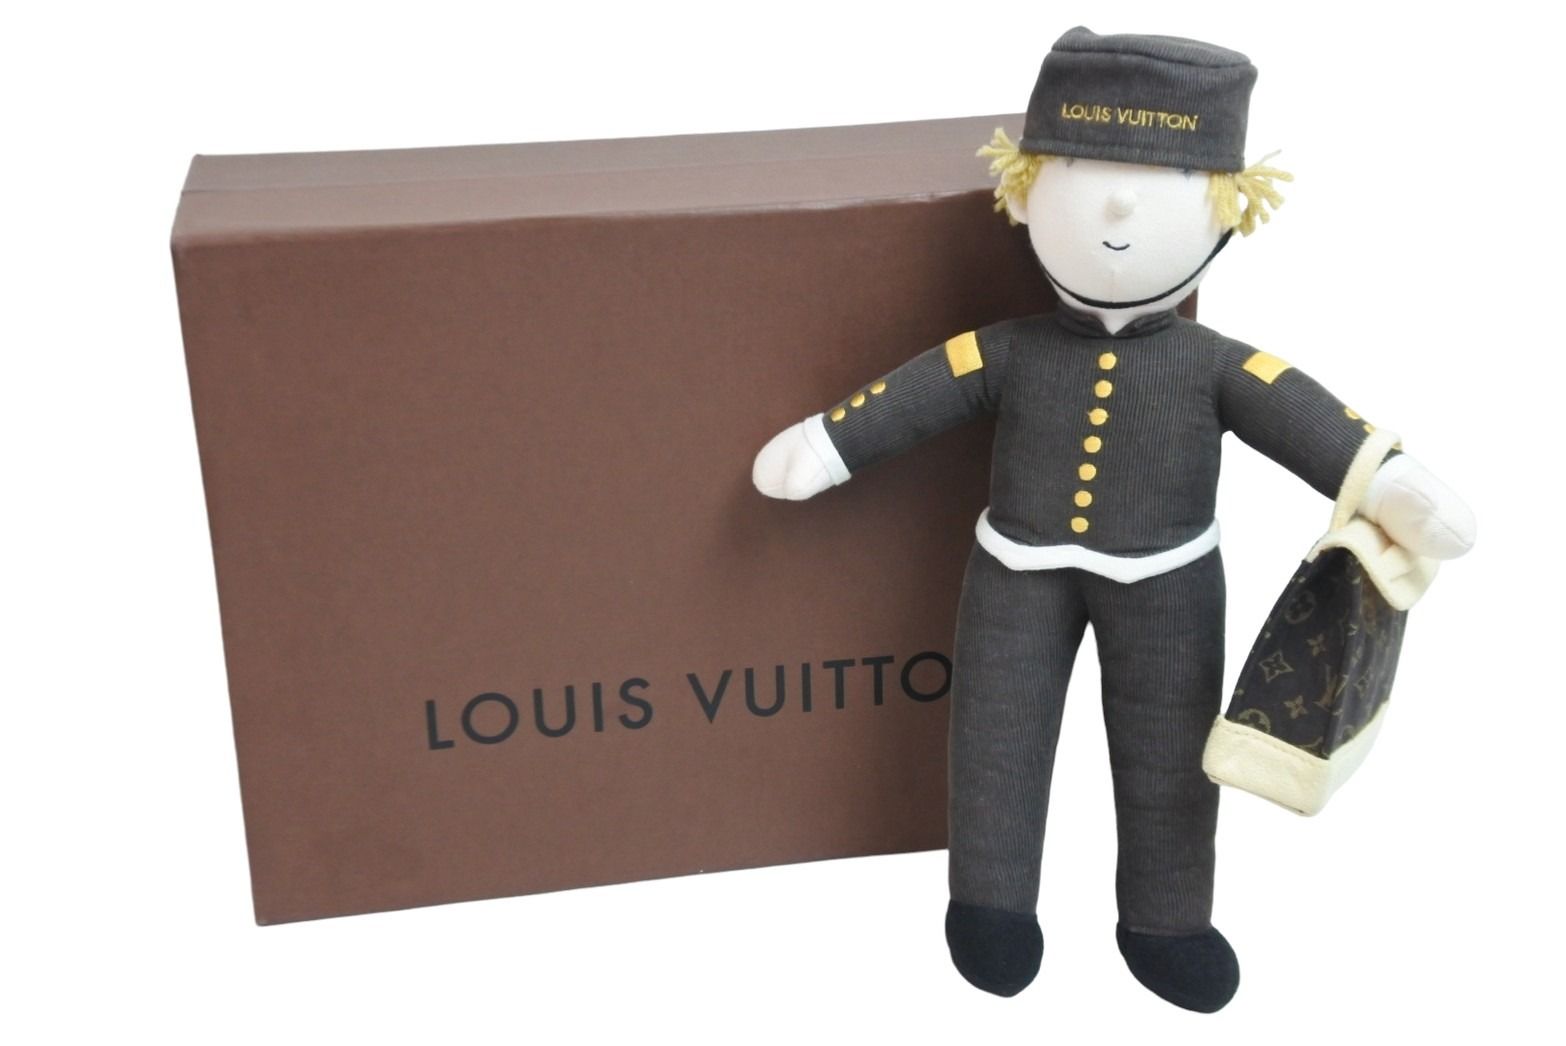 LOUIS VUITTON ルイヴィトン ベルボーイ人形 2013年 クリスマス限定